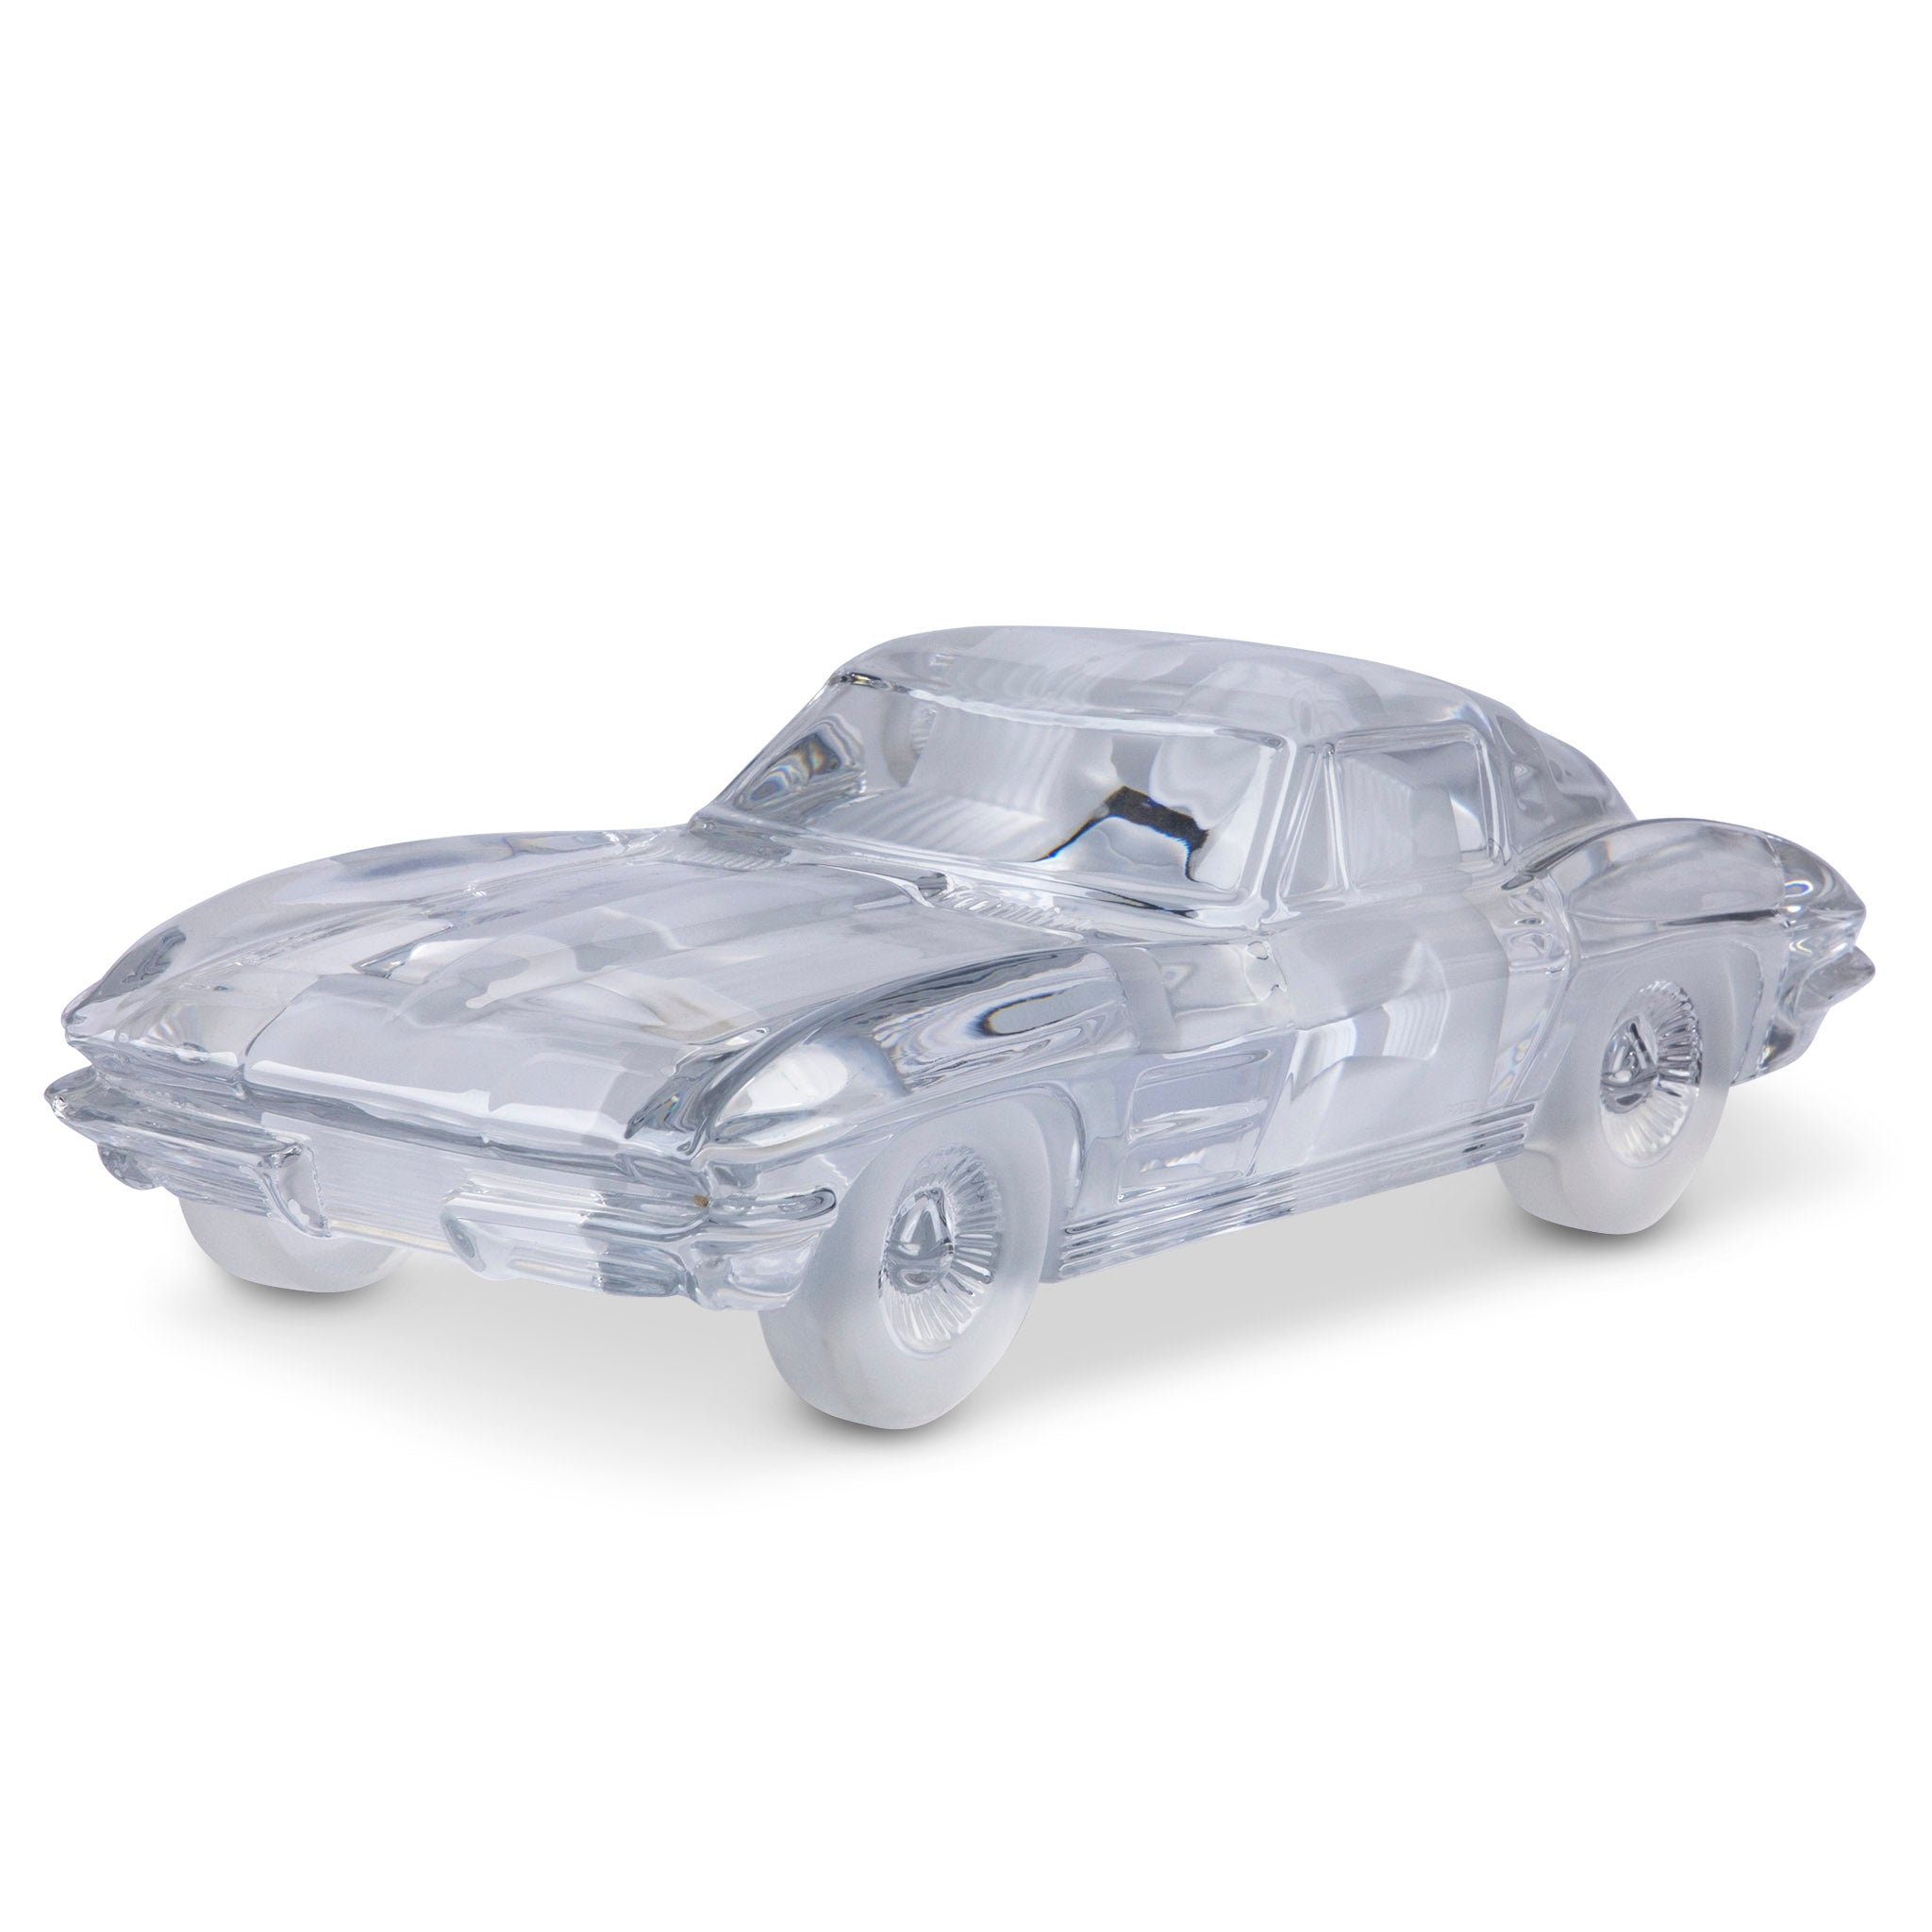 Daum Crystal Corvette Stingray Car Model